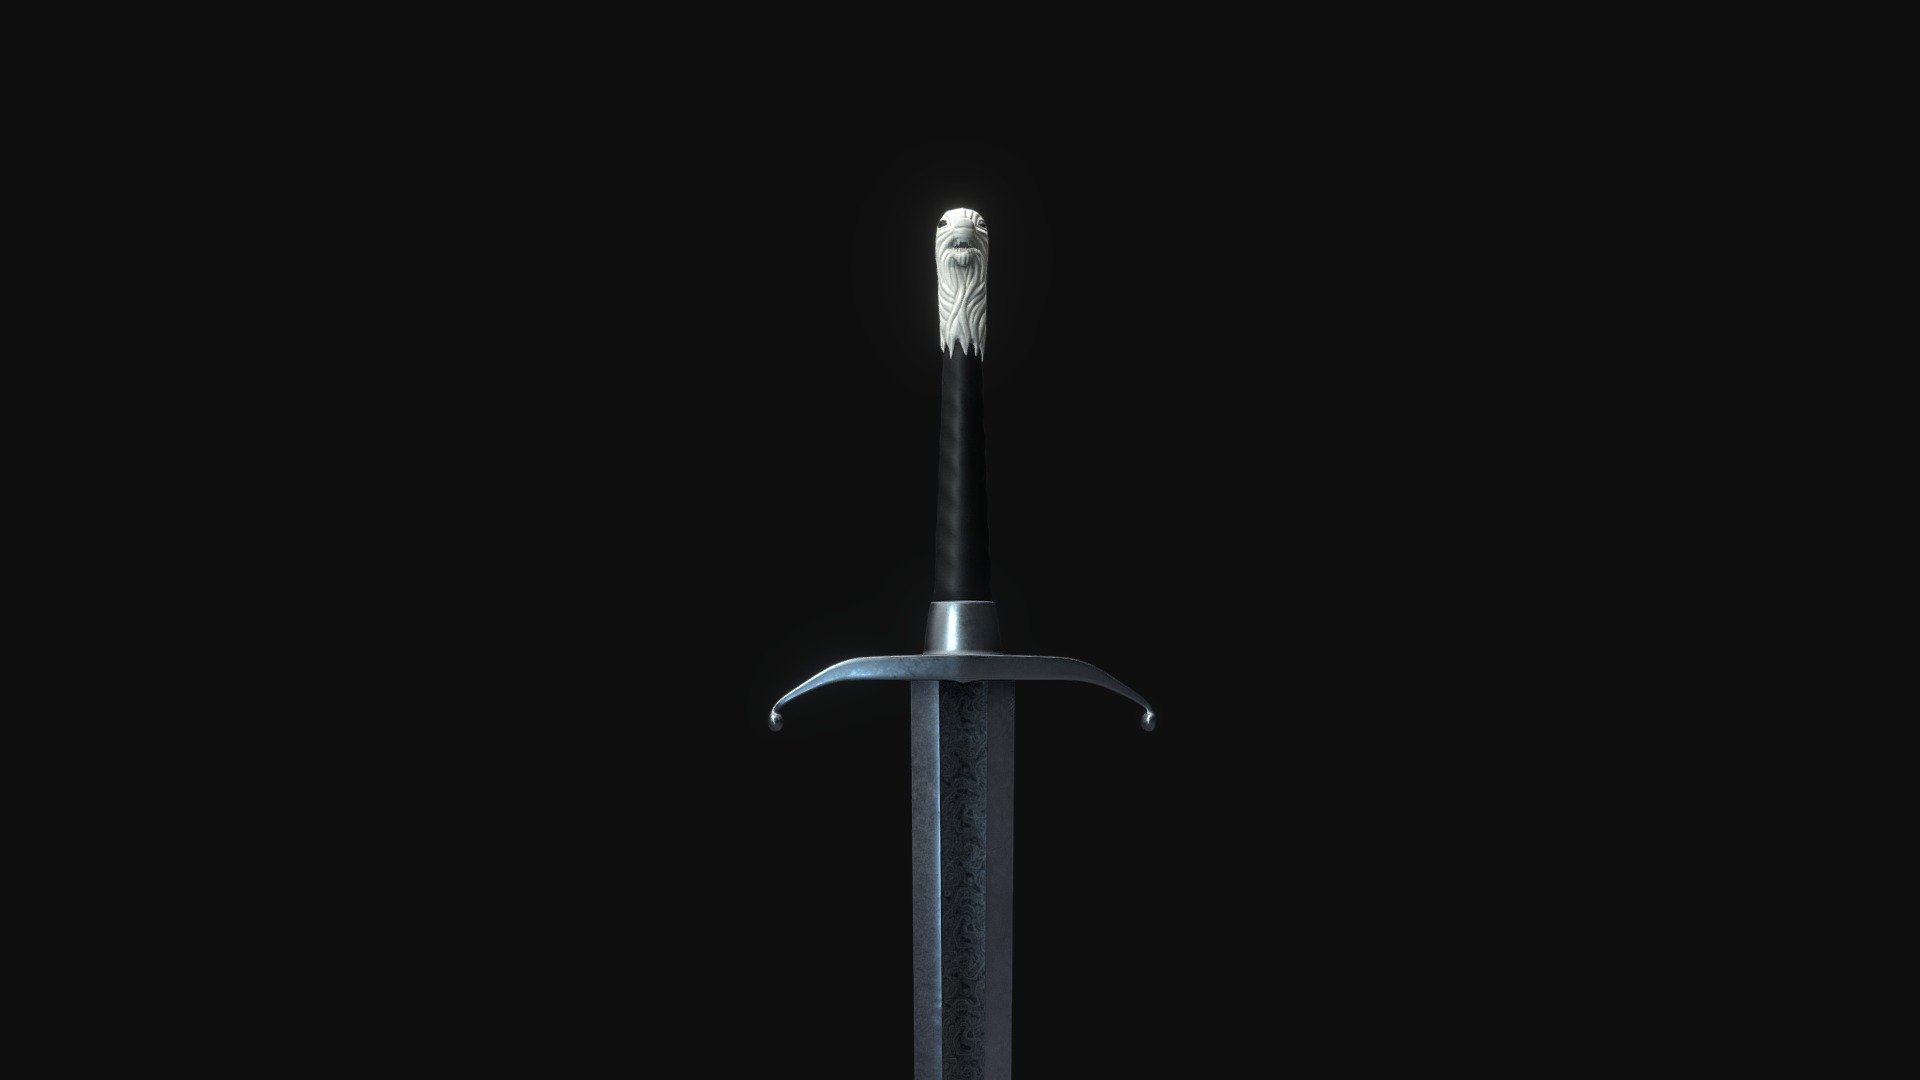 The valyrian steel blade of Jon Snow from GoT serial. (The weapon is based on season 2). 🐺

https://www.artstation.com/artwork/G0k11

Sketchfab: https://sketchfab.com/gathiarart

Artstation: https://www.artstation.com/gathiarart

E-mail: GathiarArt@gmail.com - Longclaw sword (Game of Thrones) - 3D model by Gathiar Art (@gathiarart) 3d model